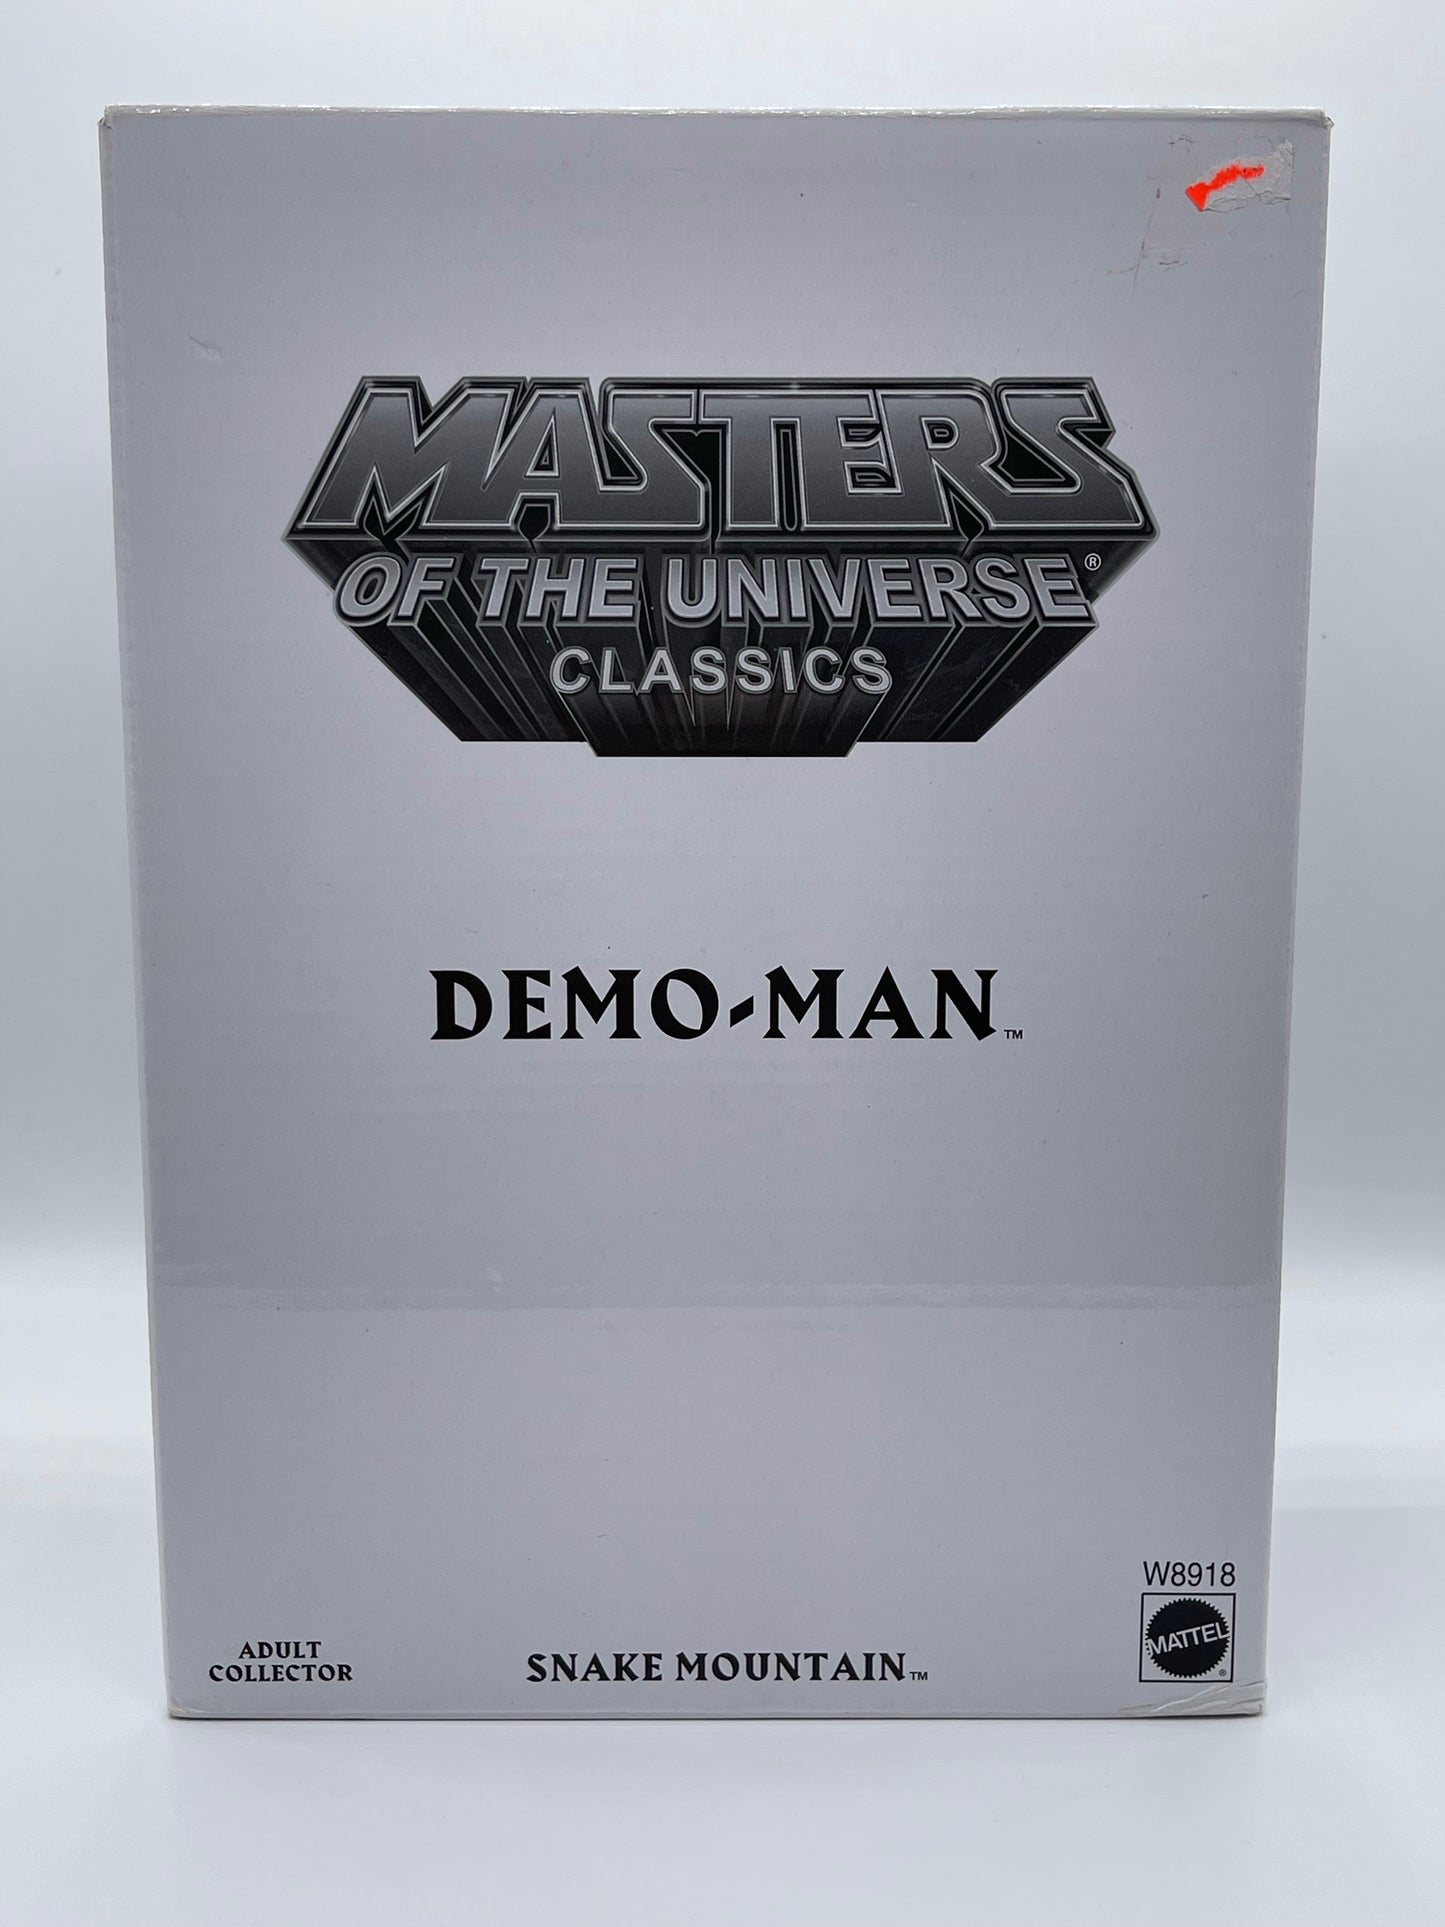 Masters of the Universe Classics Demo-man